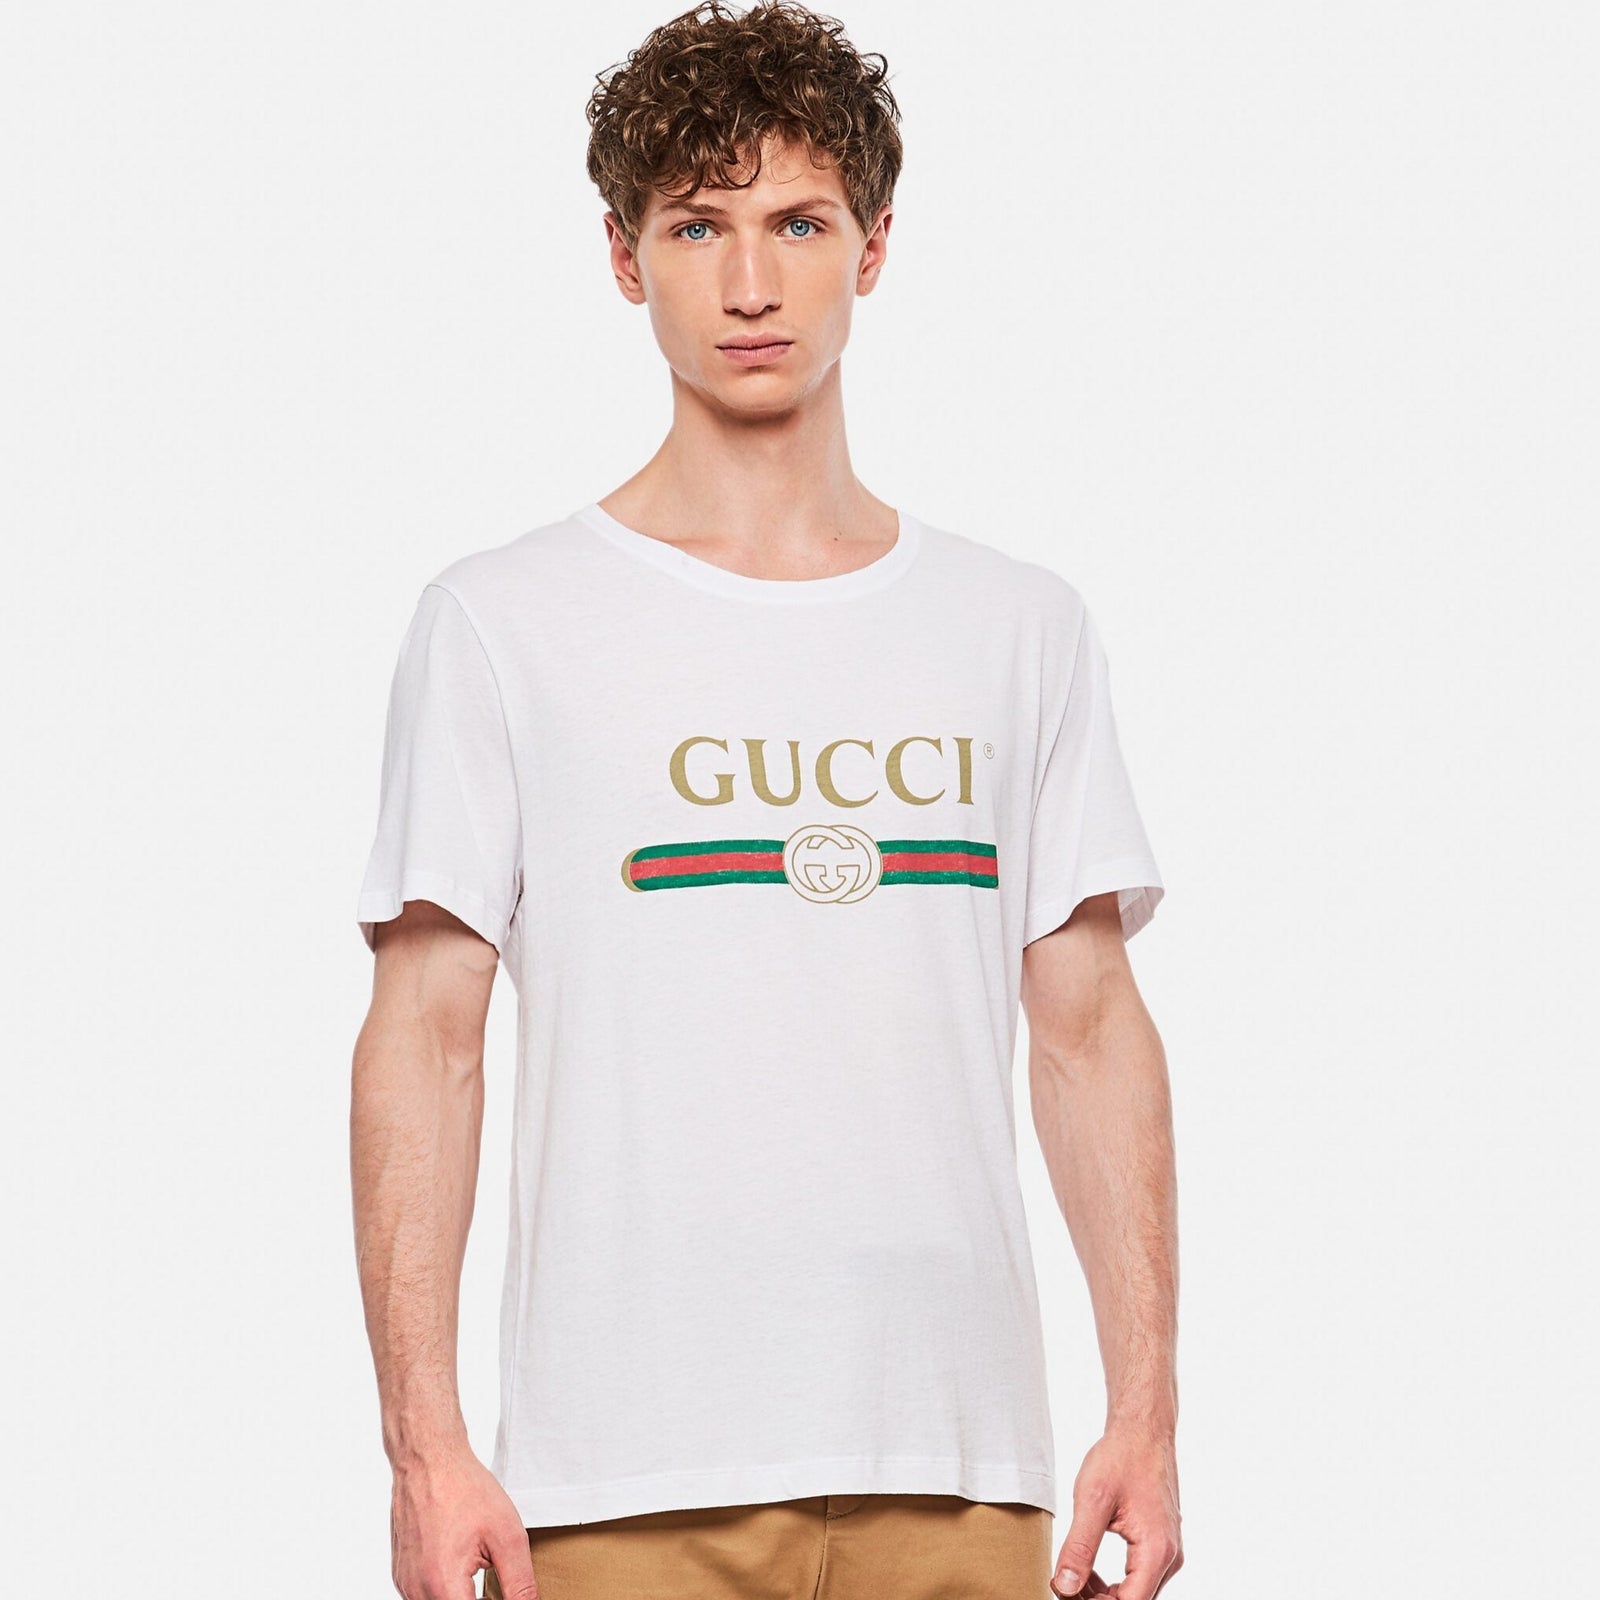 Unisex Oversize T-shirt with Gucci logo